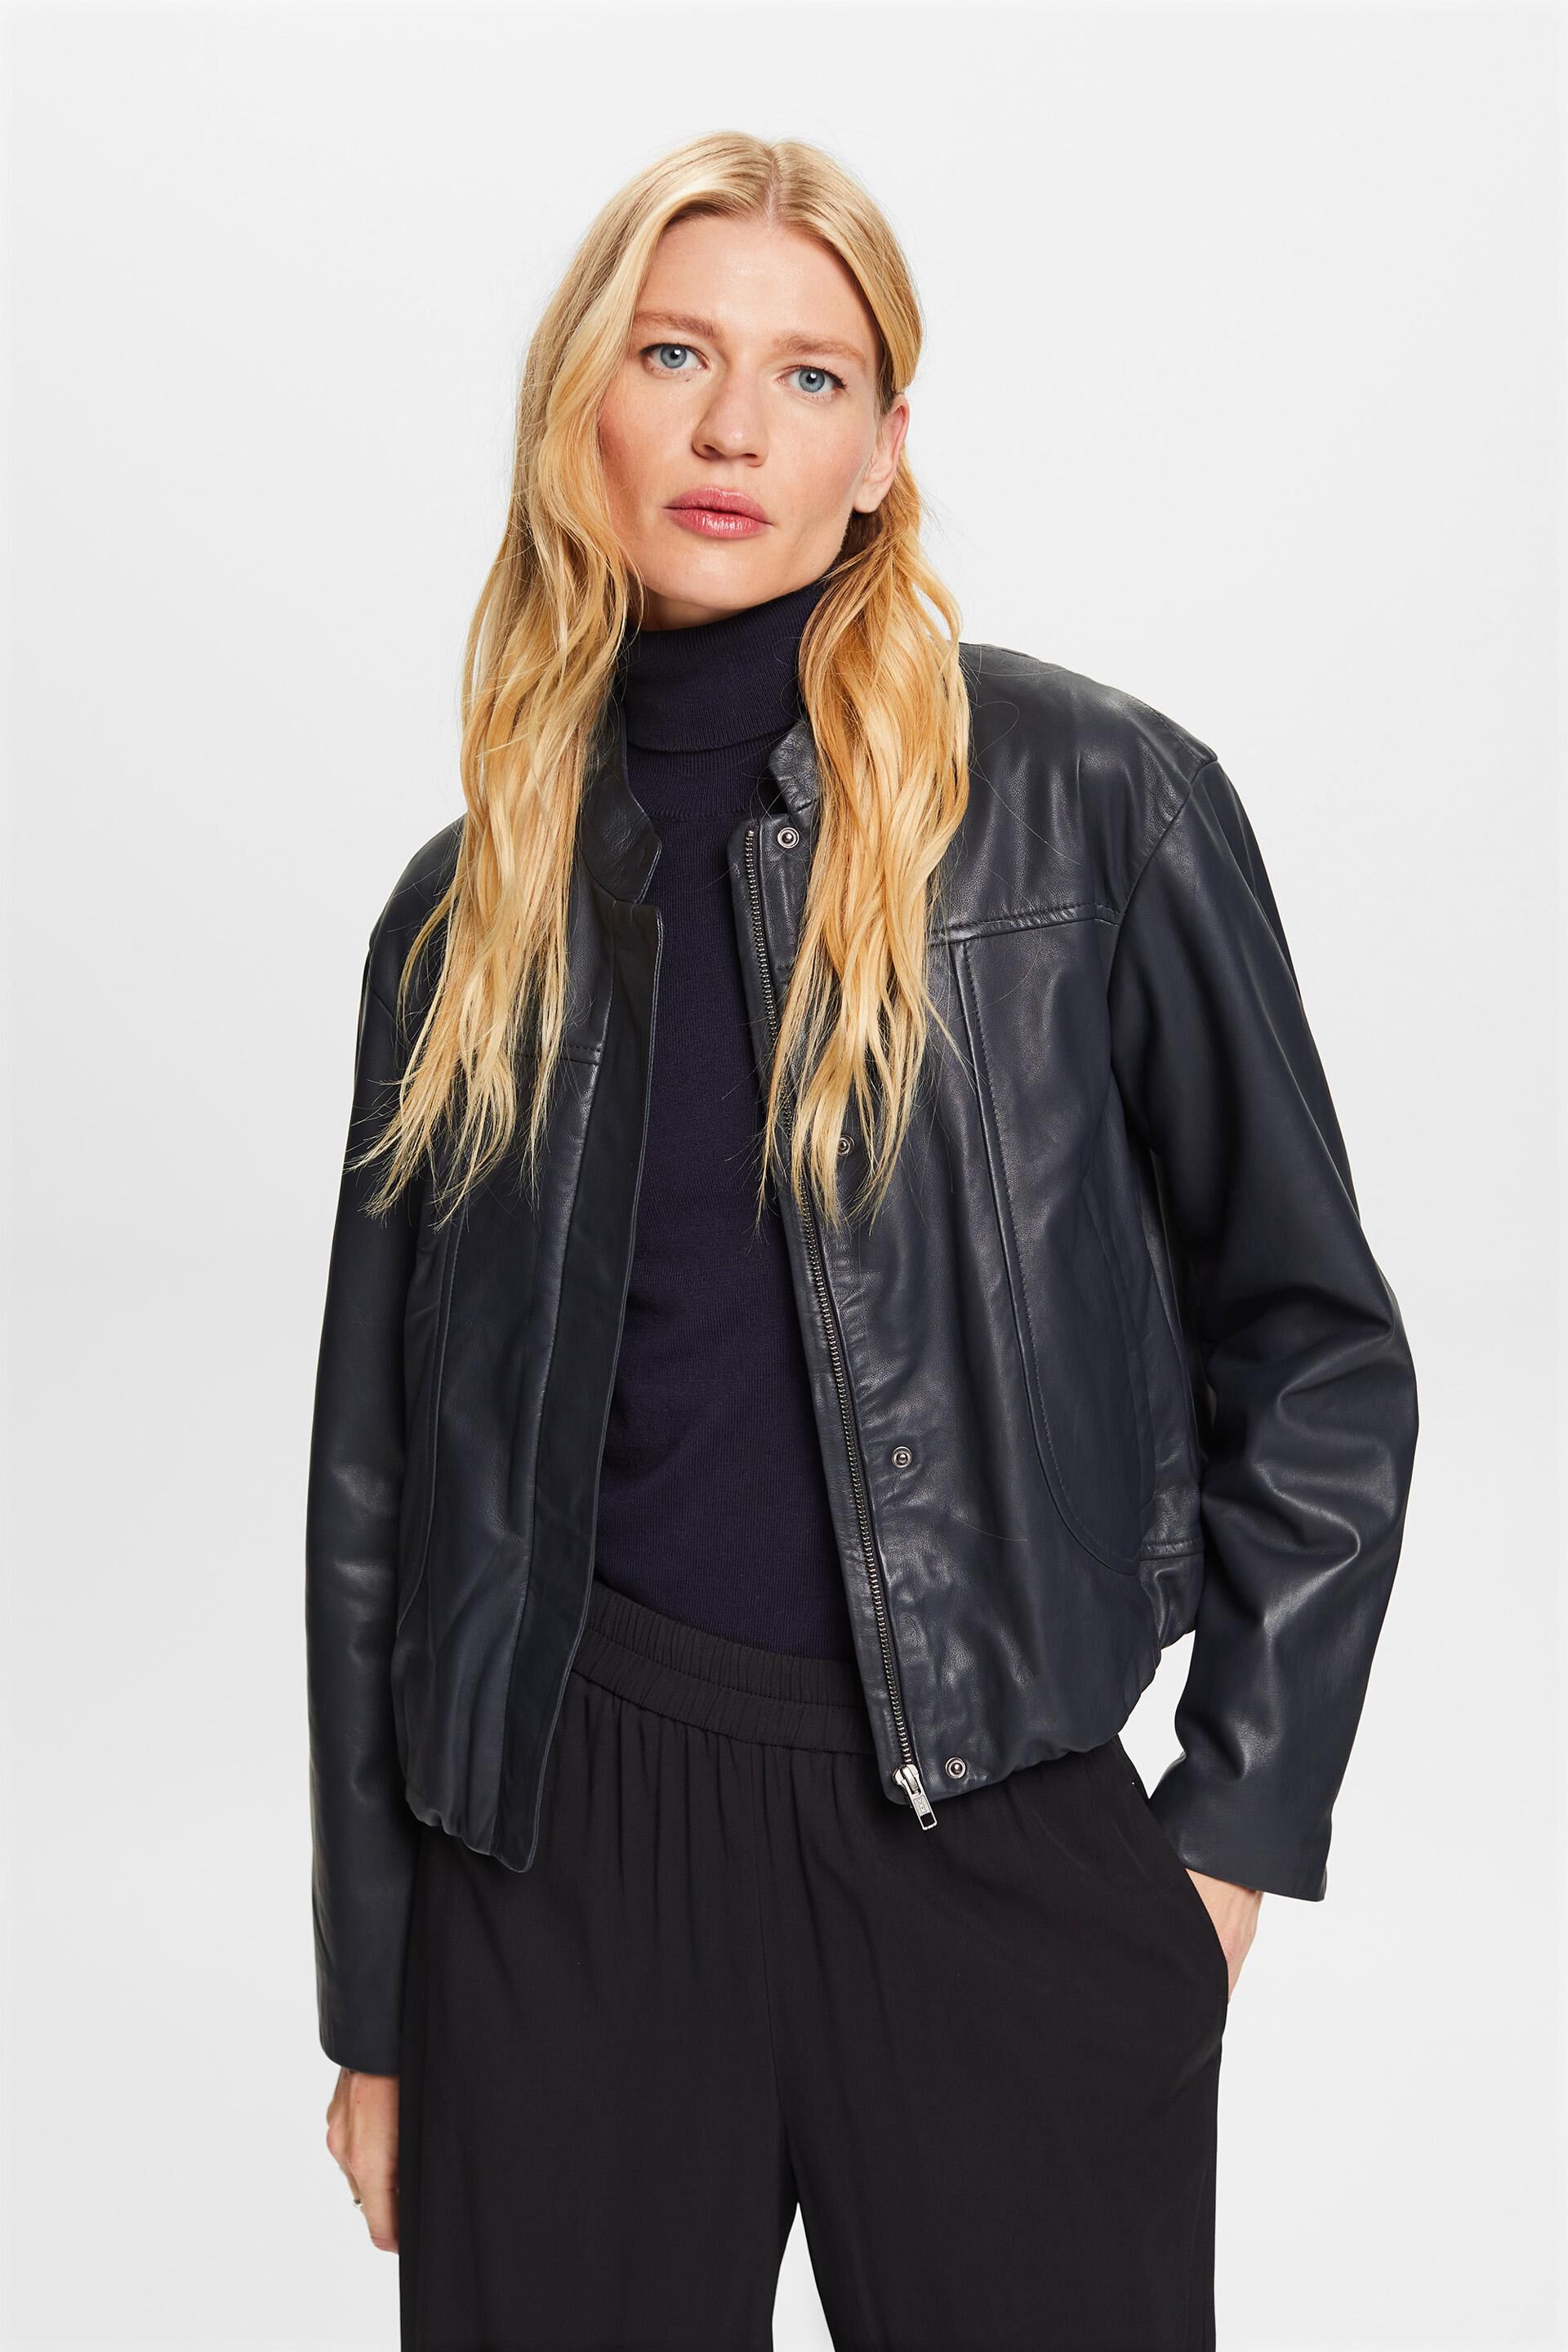 Esprit Band Collar Leather Jacket